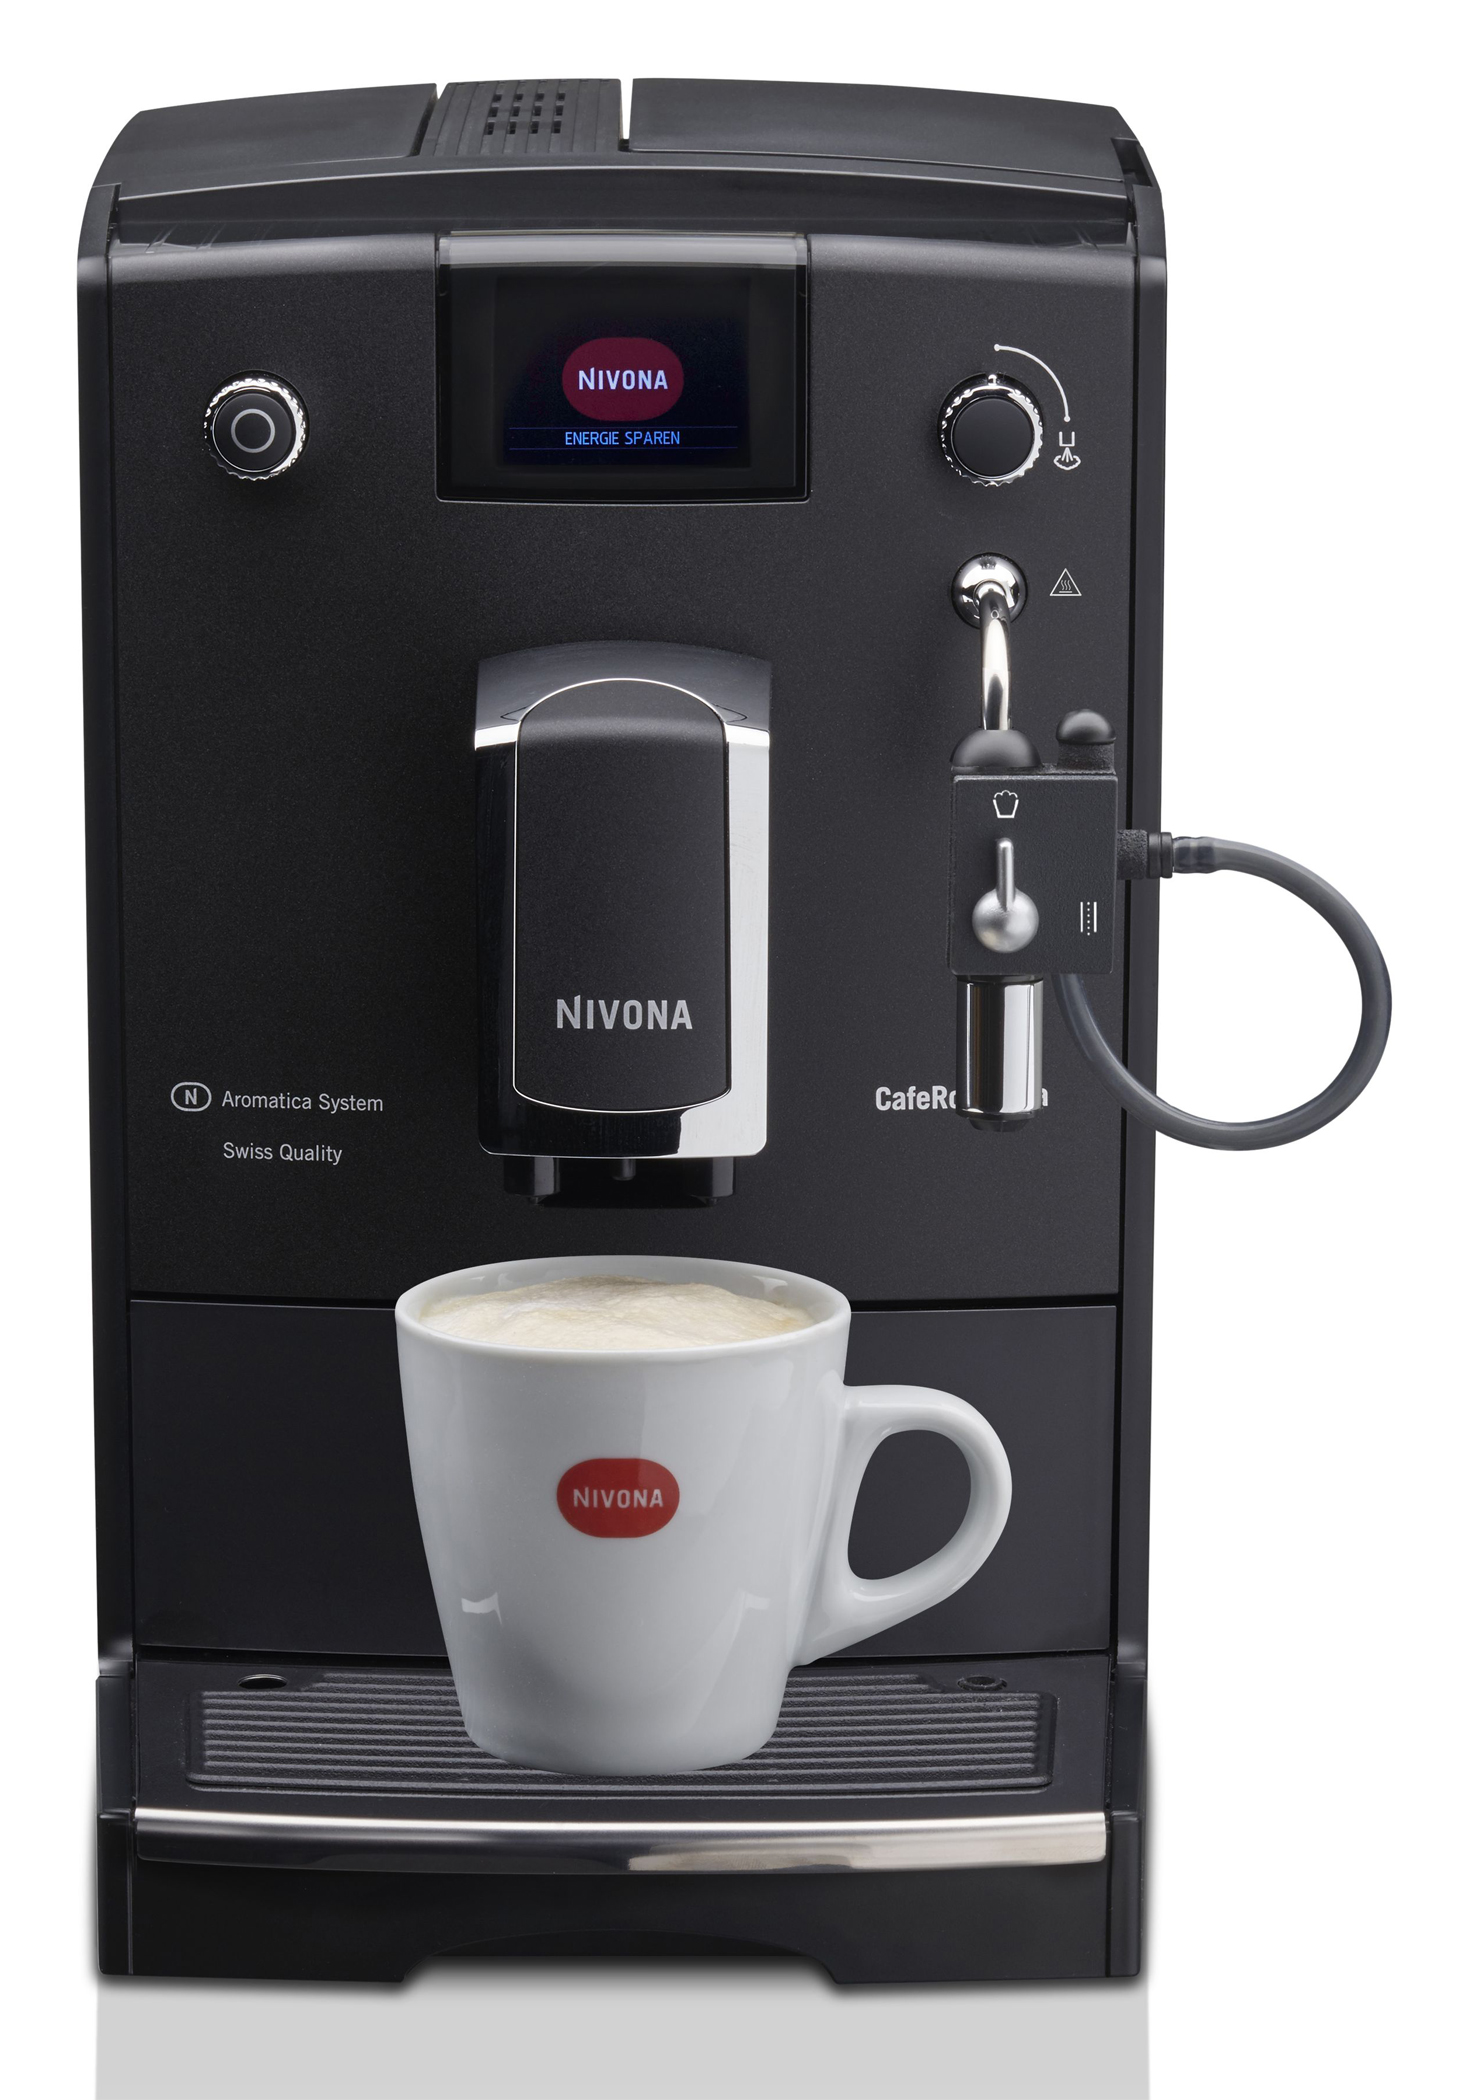 https://www.infoboard.de/wp-content/uploads/2017/12/Nivona-Kaffeevollautomat-CafeRomatica-660.jpg